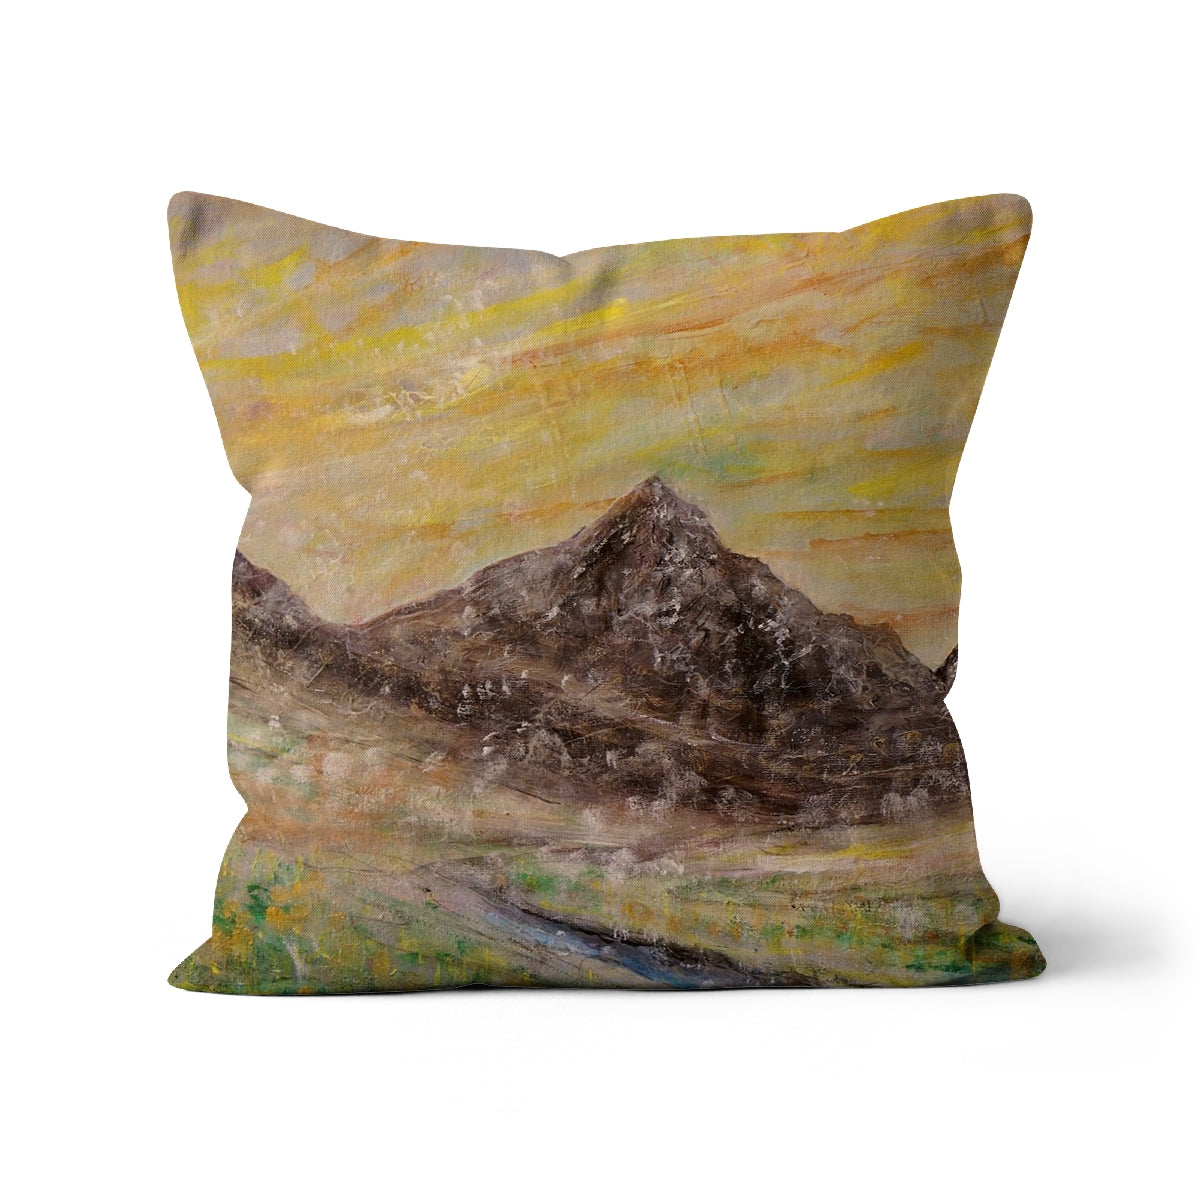 Glen Rosa Mist Arran Art Gifts Cushion-Cushions-Arran Art Gallery-Linen-18"x18"-Paintings, Prints, Homeware, Art Gifts From Scotland By Scottish Artist Kevin Hunter